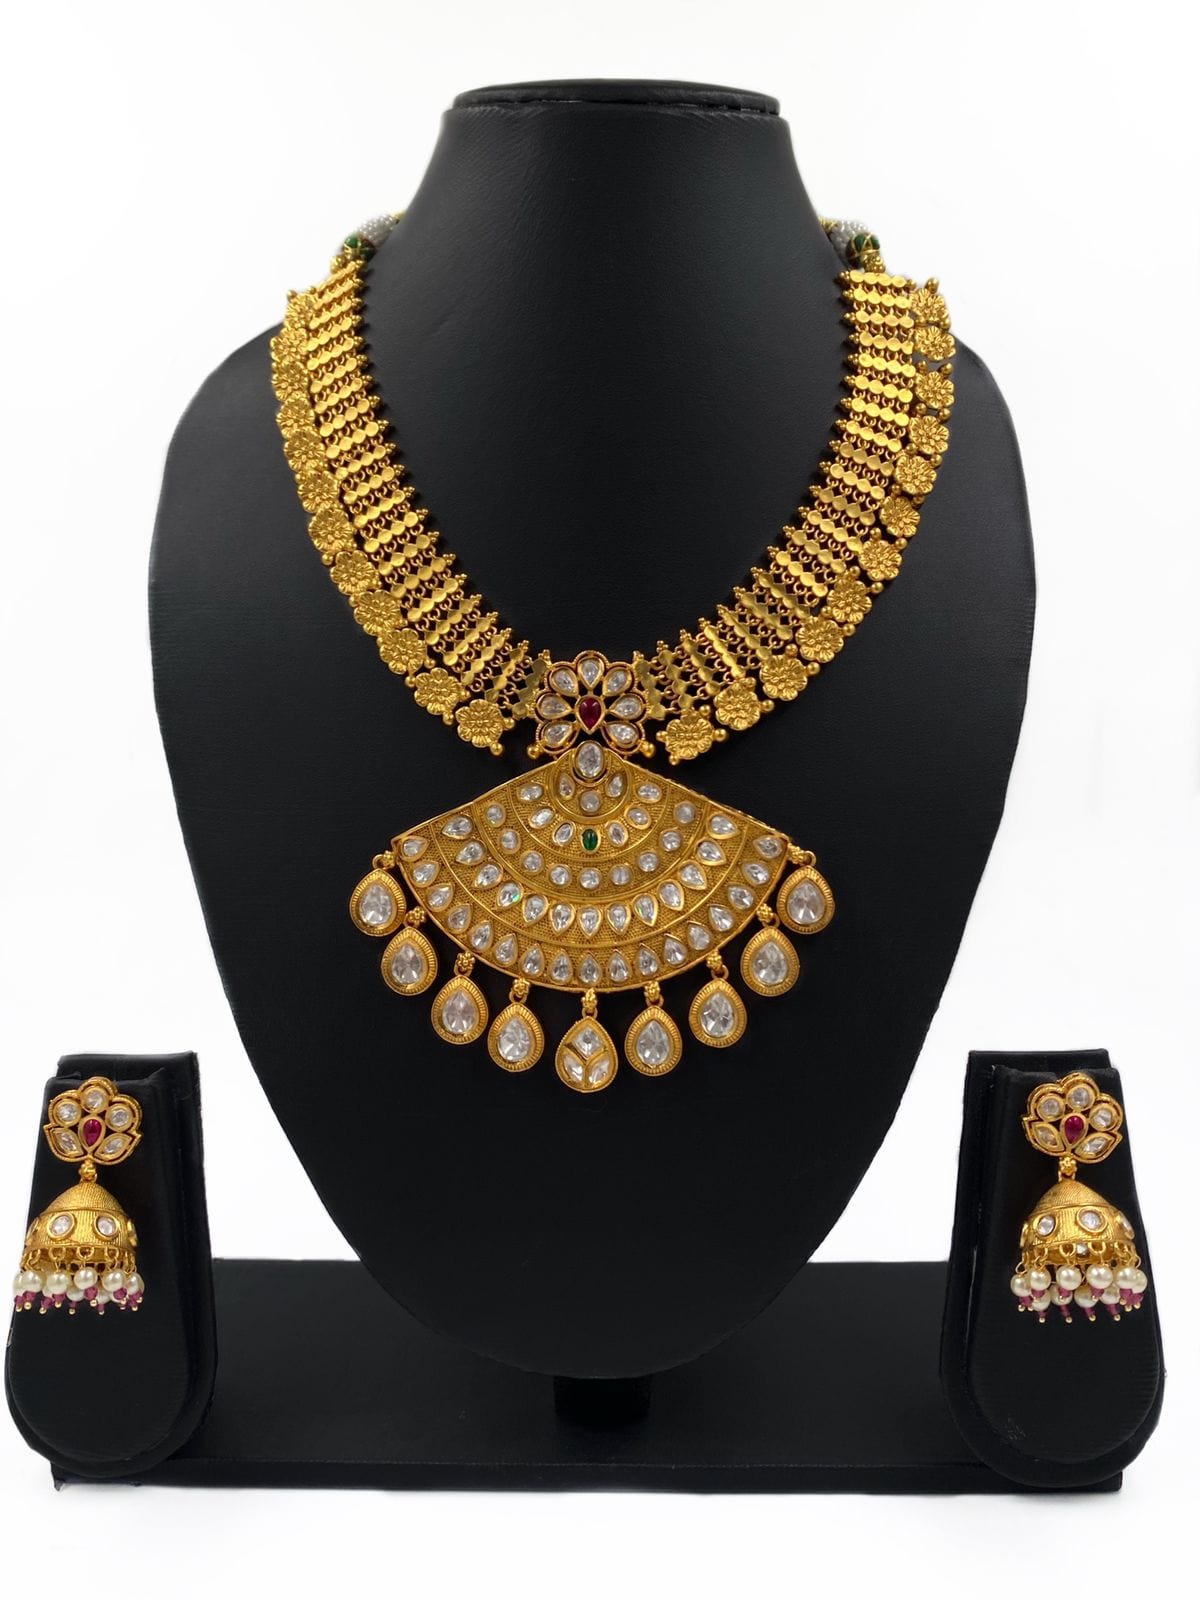 Ethnic Gold Plated Golden Kundan Necklace Set For Ladies By Gehna Shop Antique Golden Necklace Sets